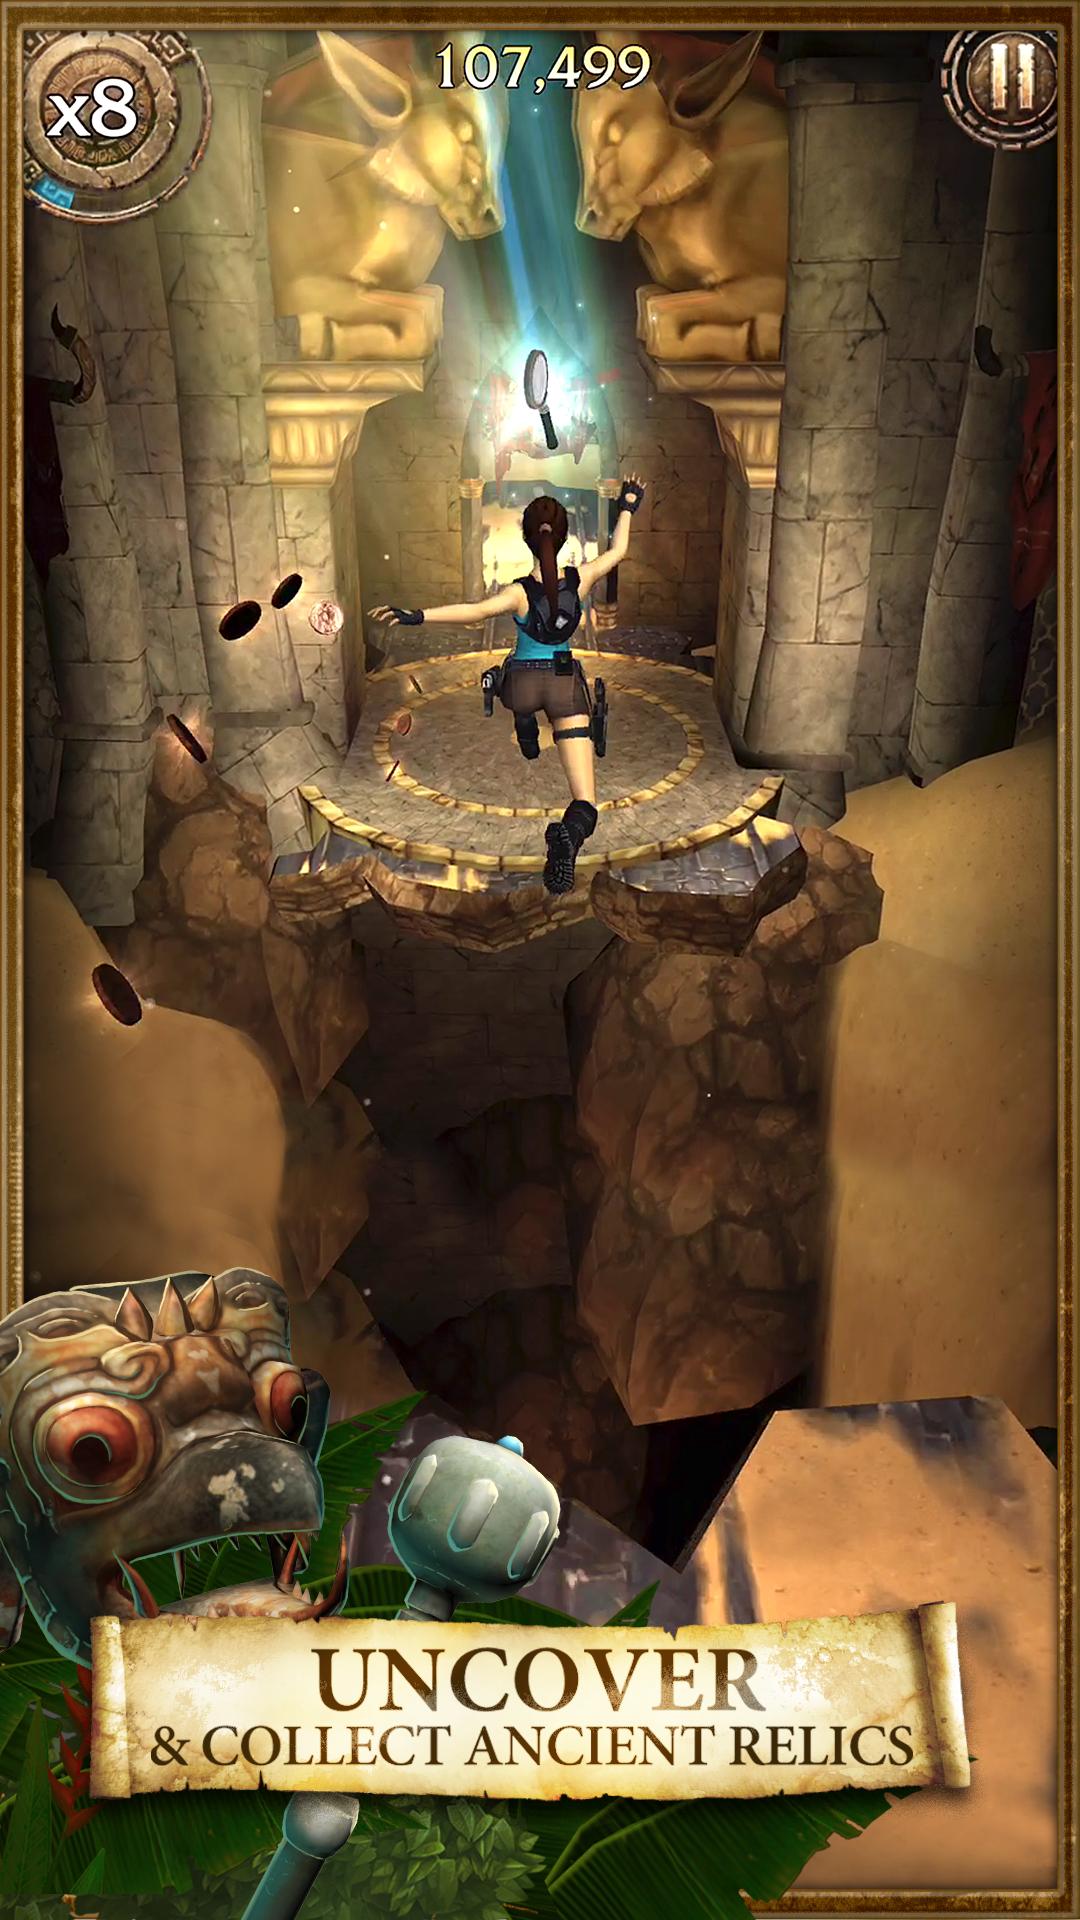 [Game Android] Lara Croft: Relic Run